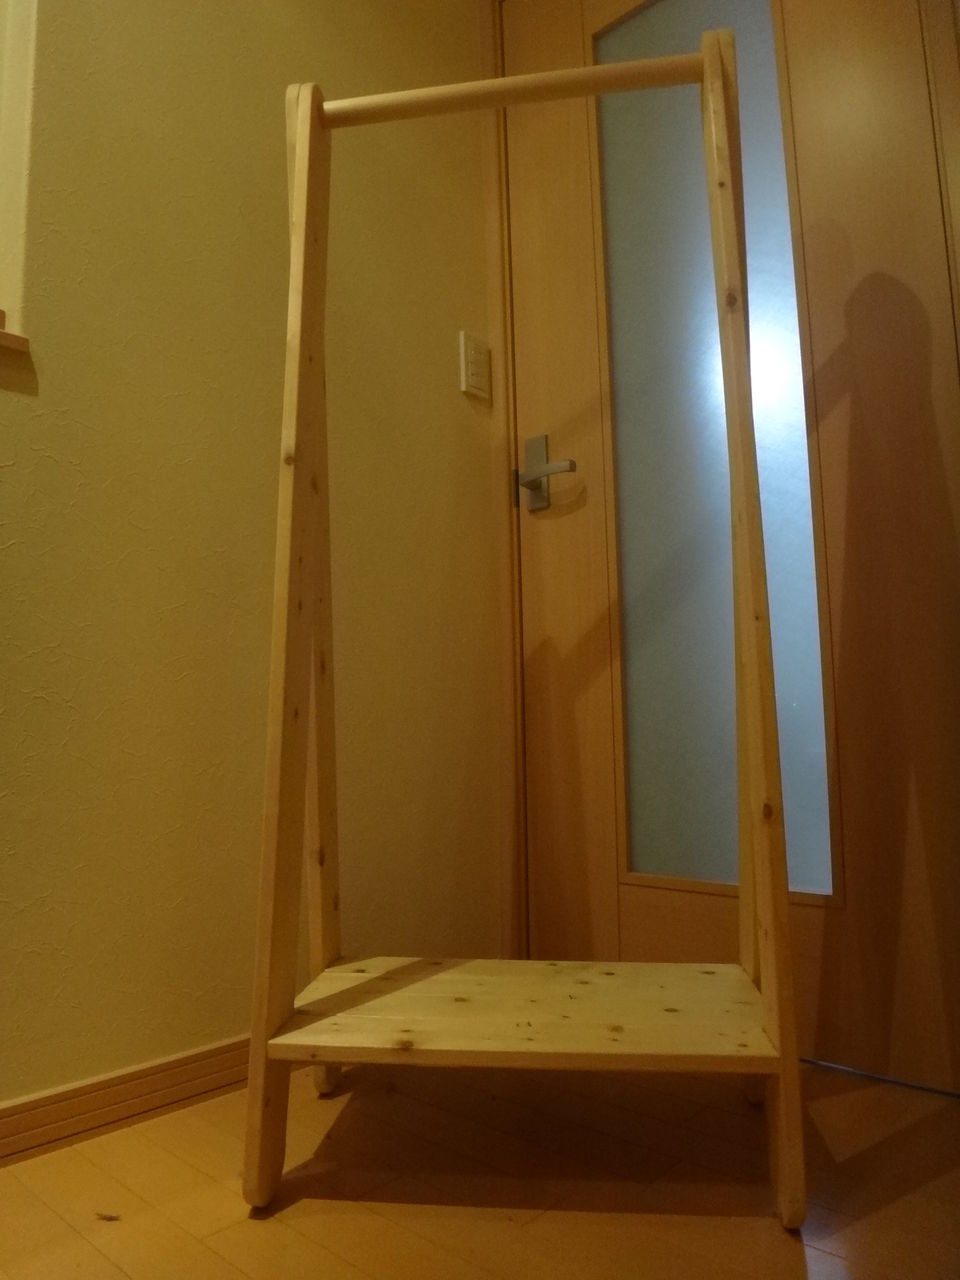 ｄｉｙ ｓｐｆ１ ４材で作る 玄関用木製ハンガーラック 道産子サラリーマンの北海道生活を楽しむ方法